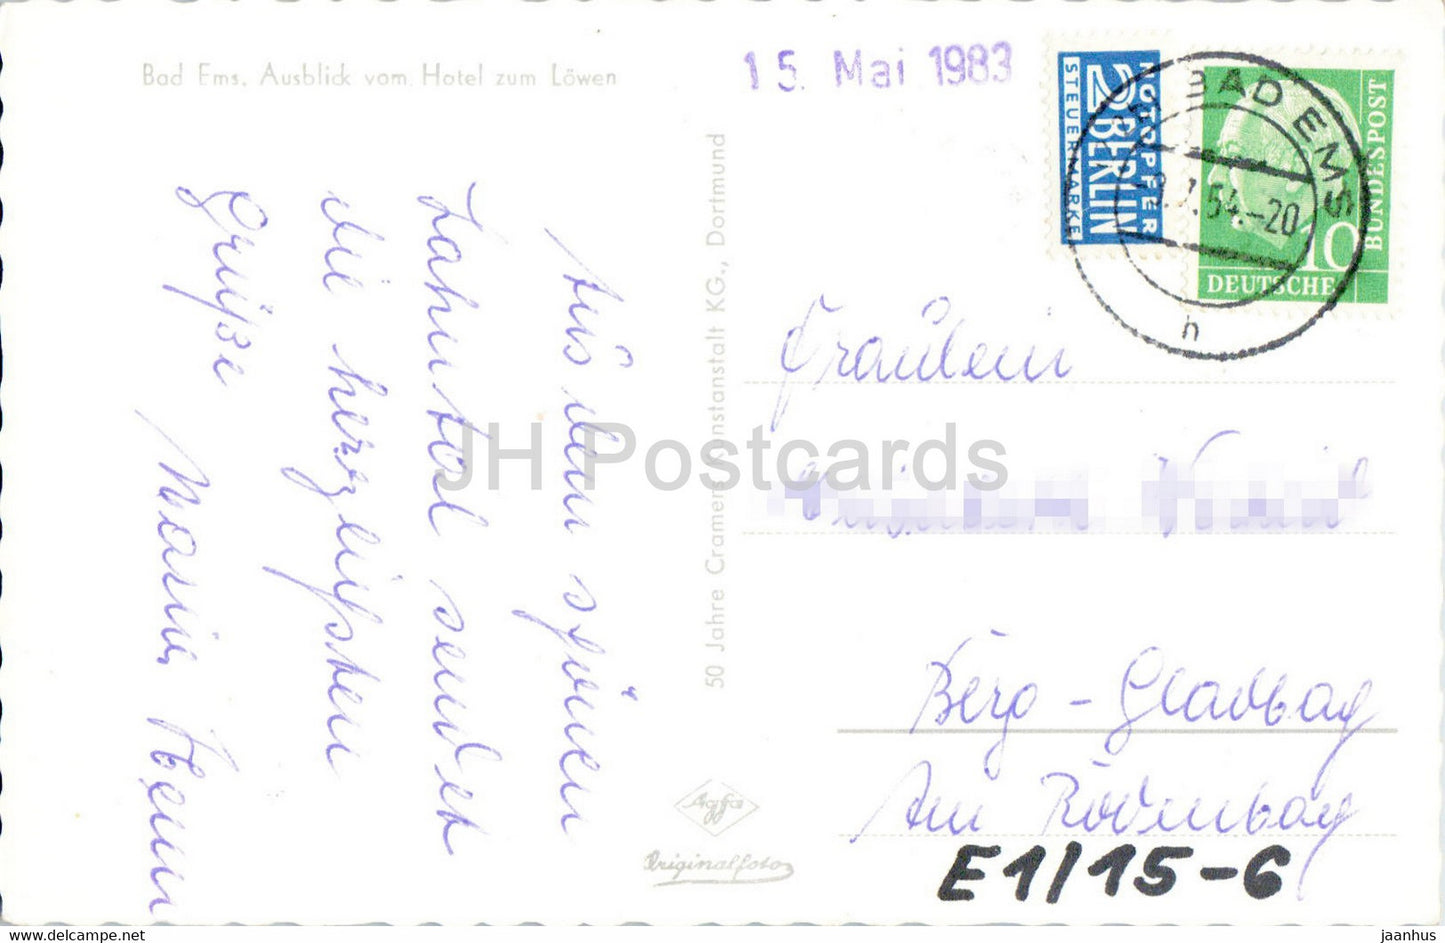 Bad Ems - Ausblick vom Hotel zum Lowen - bridge - old postcard - 1954 - Germany - used